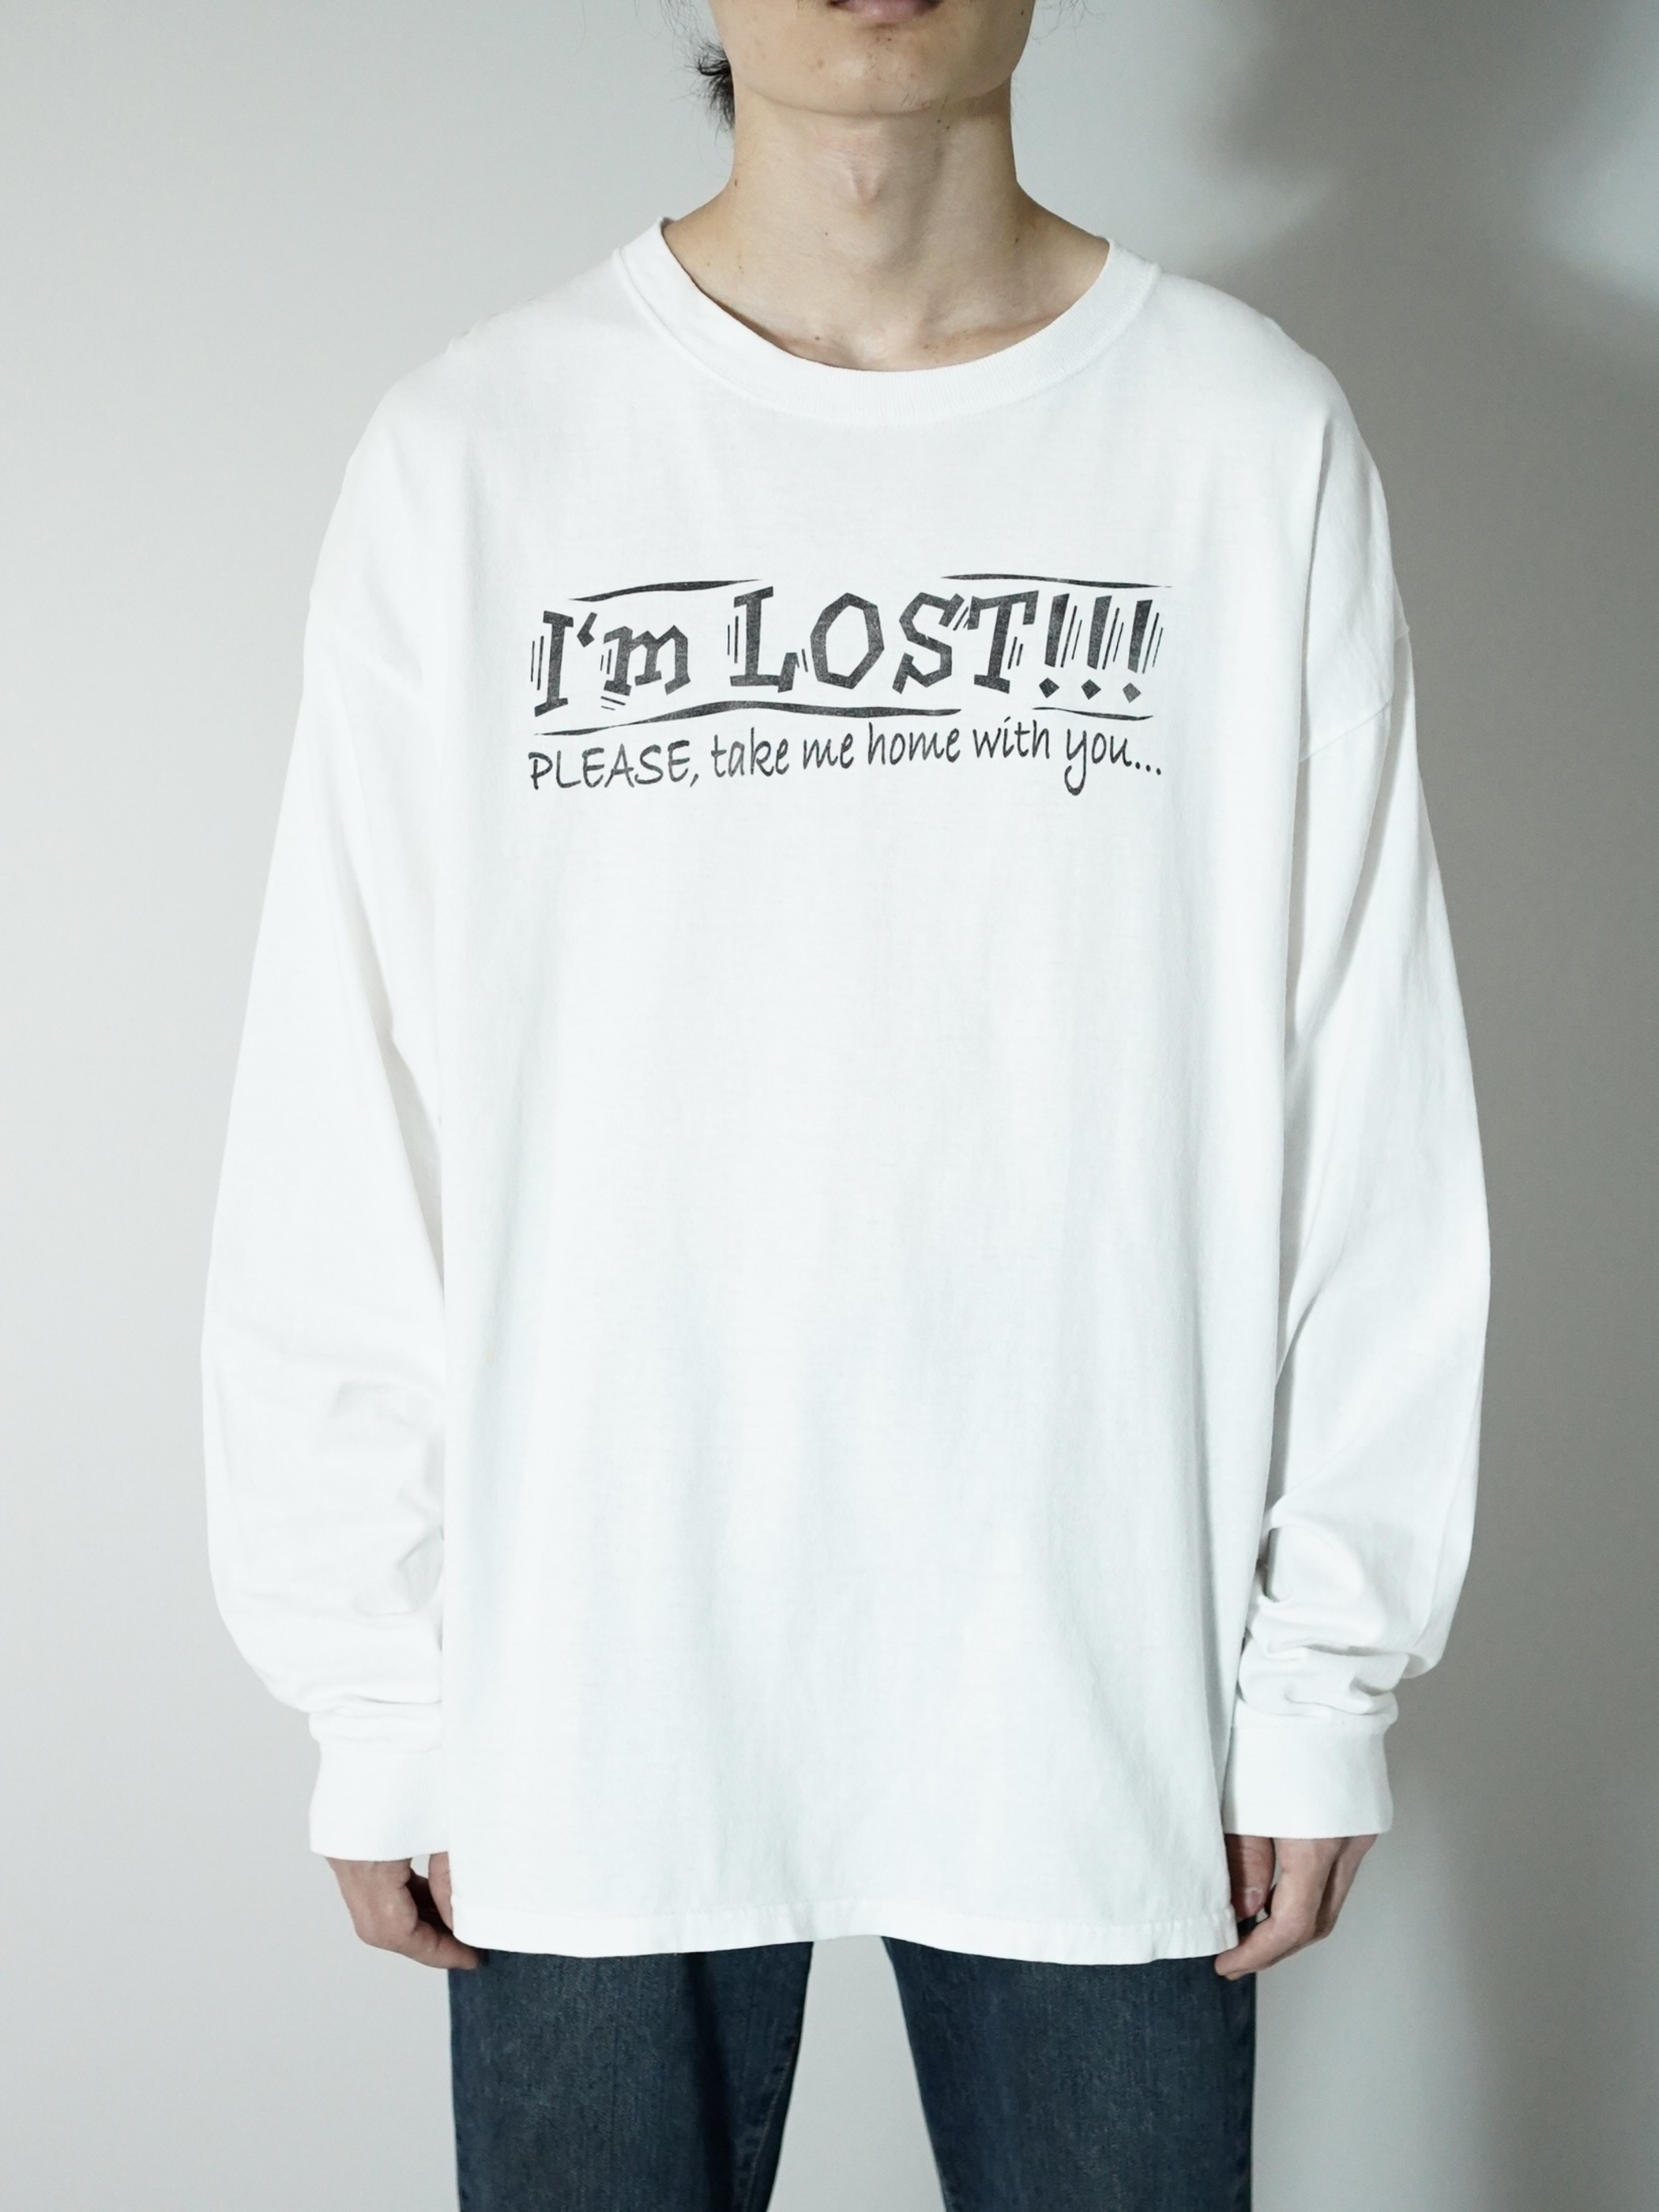 I'm LOST!!! print L/S Tee/Knit in USA